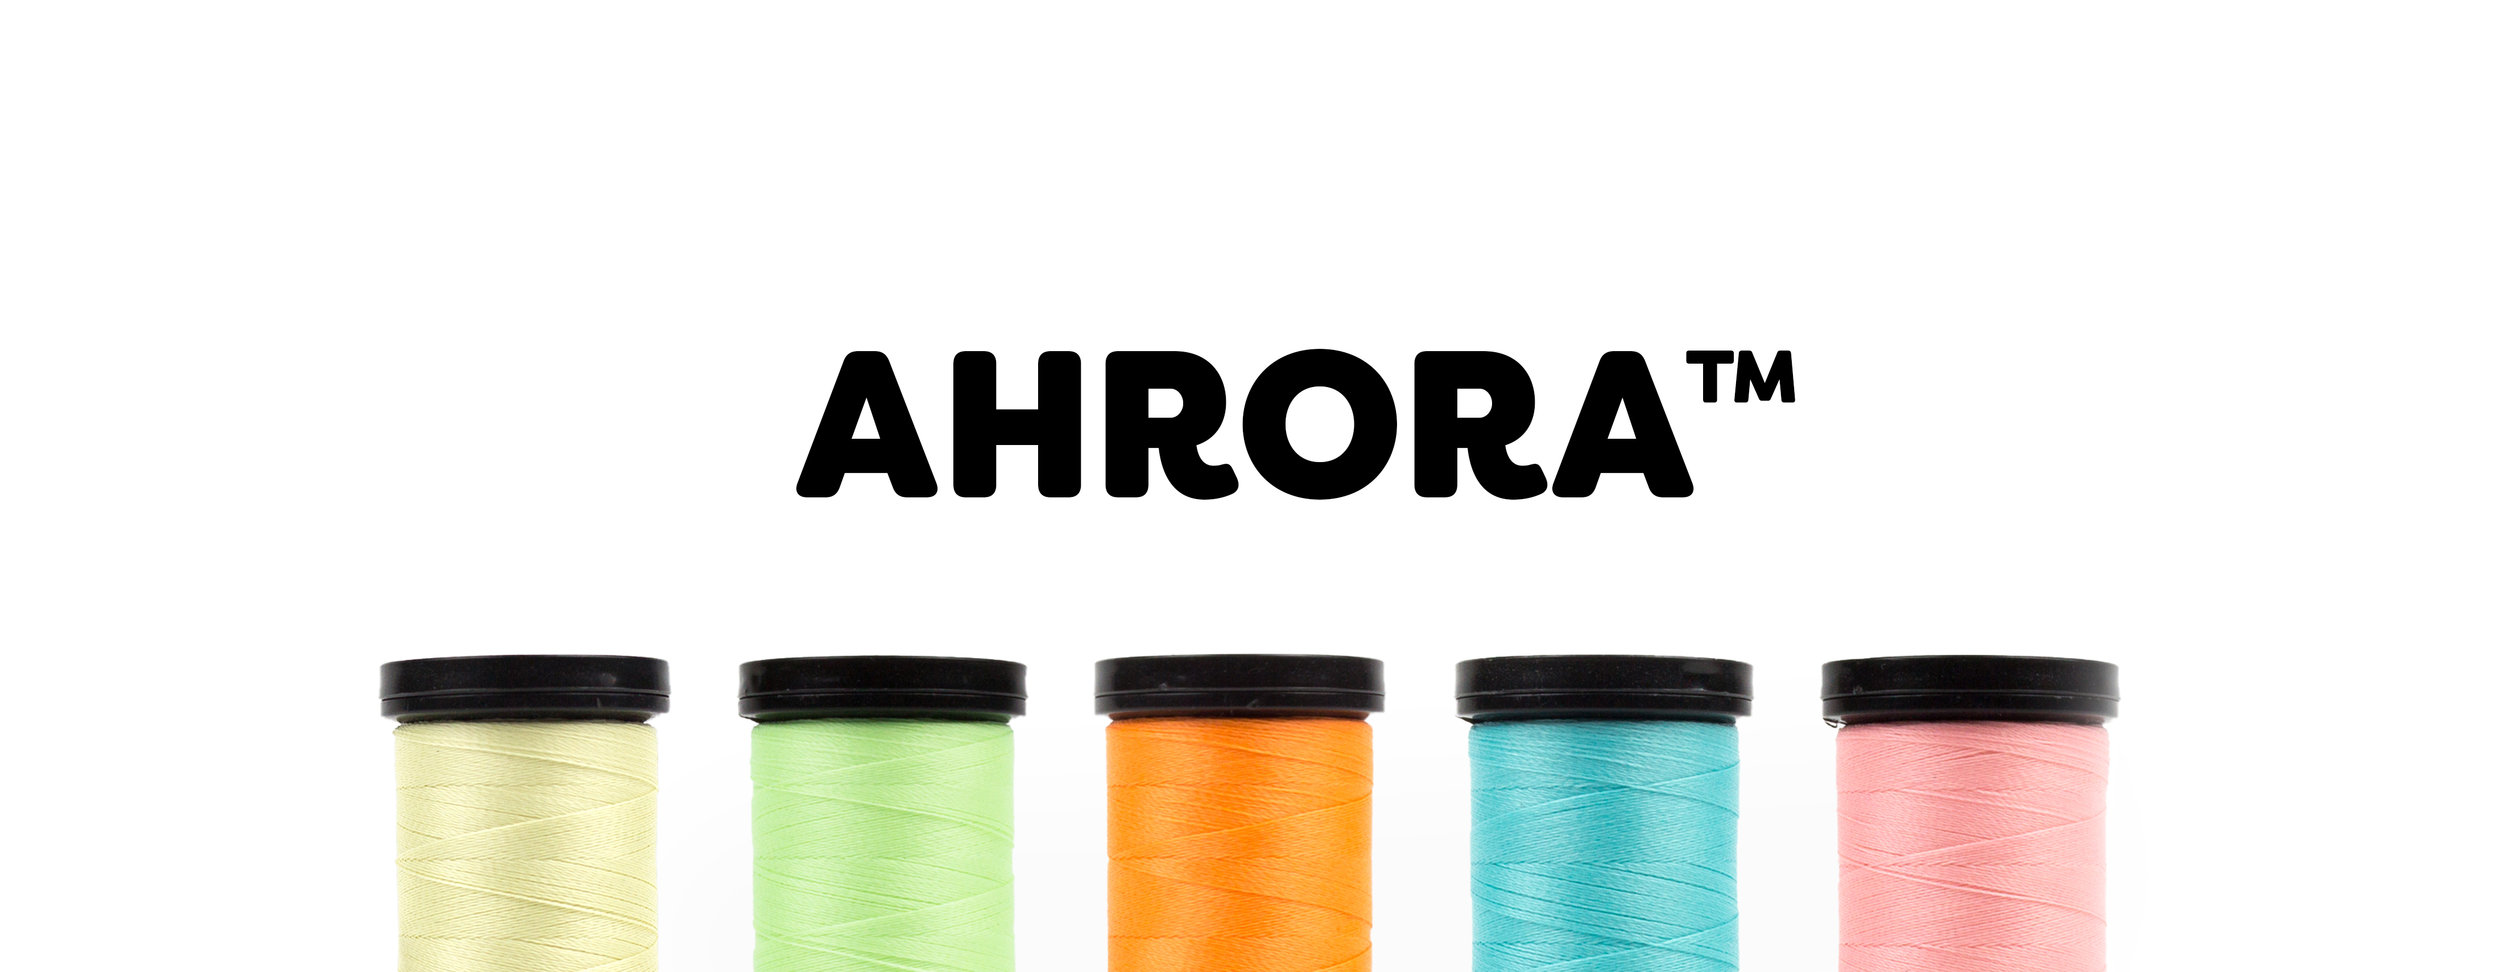 Ahrora™ Glow in the Dark Thread - WonderFil